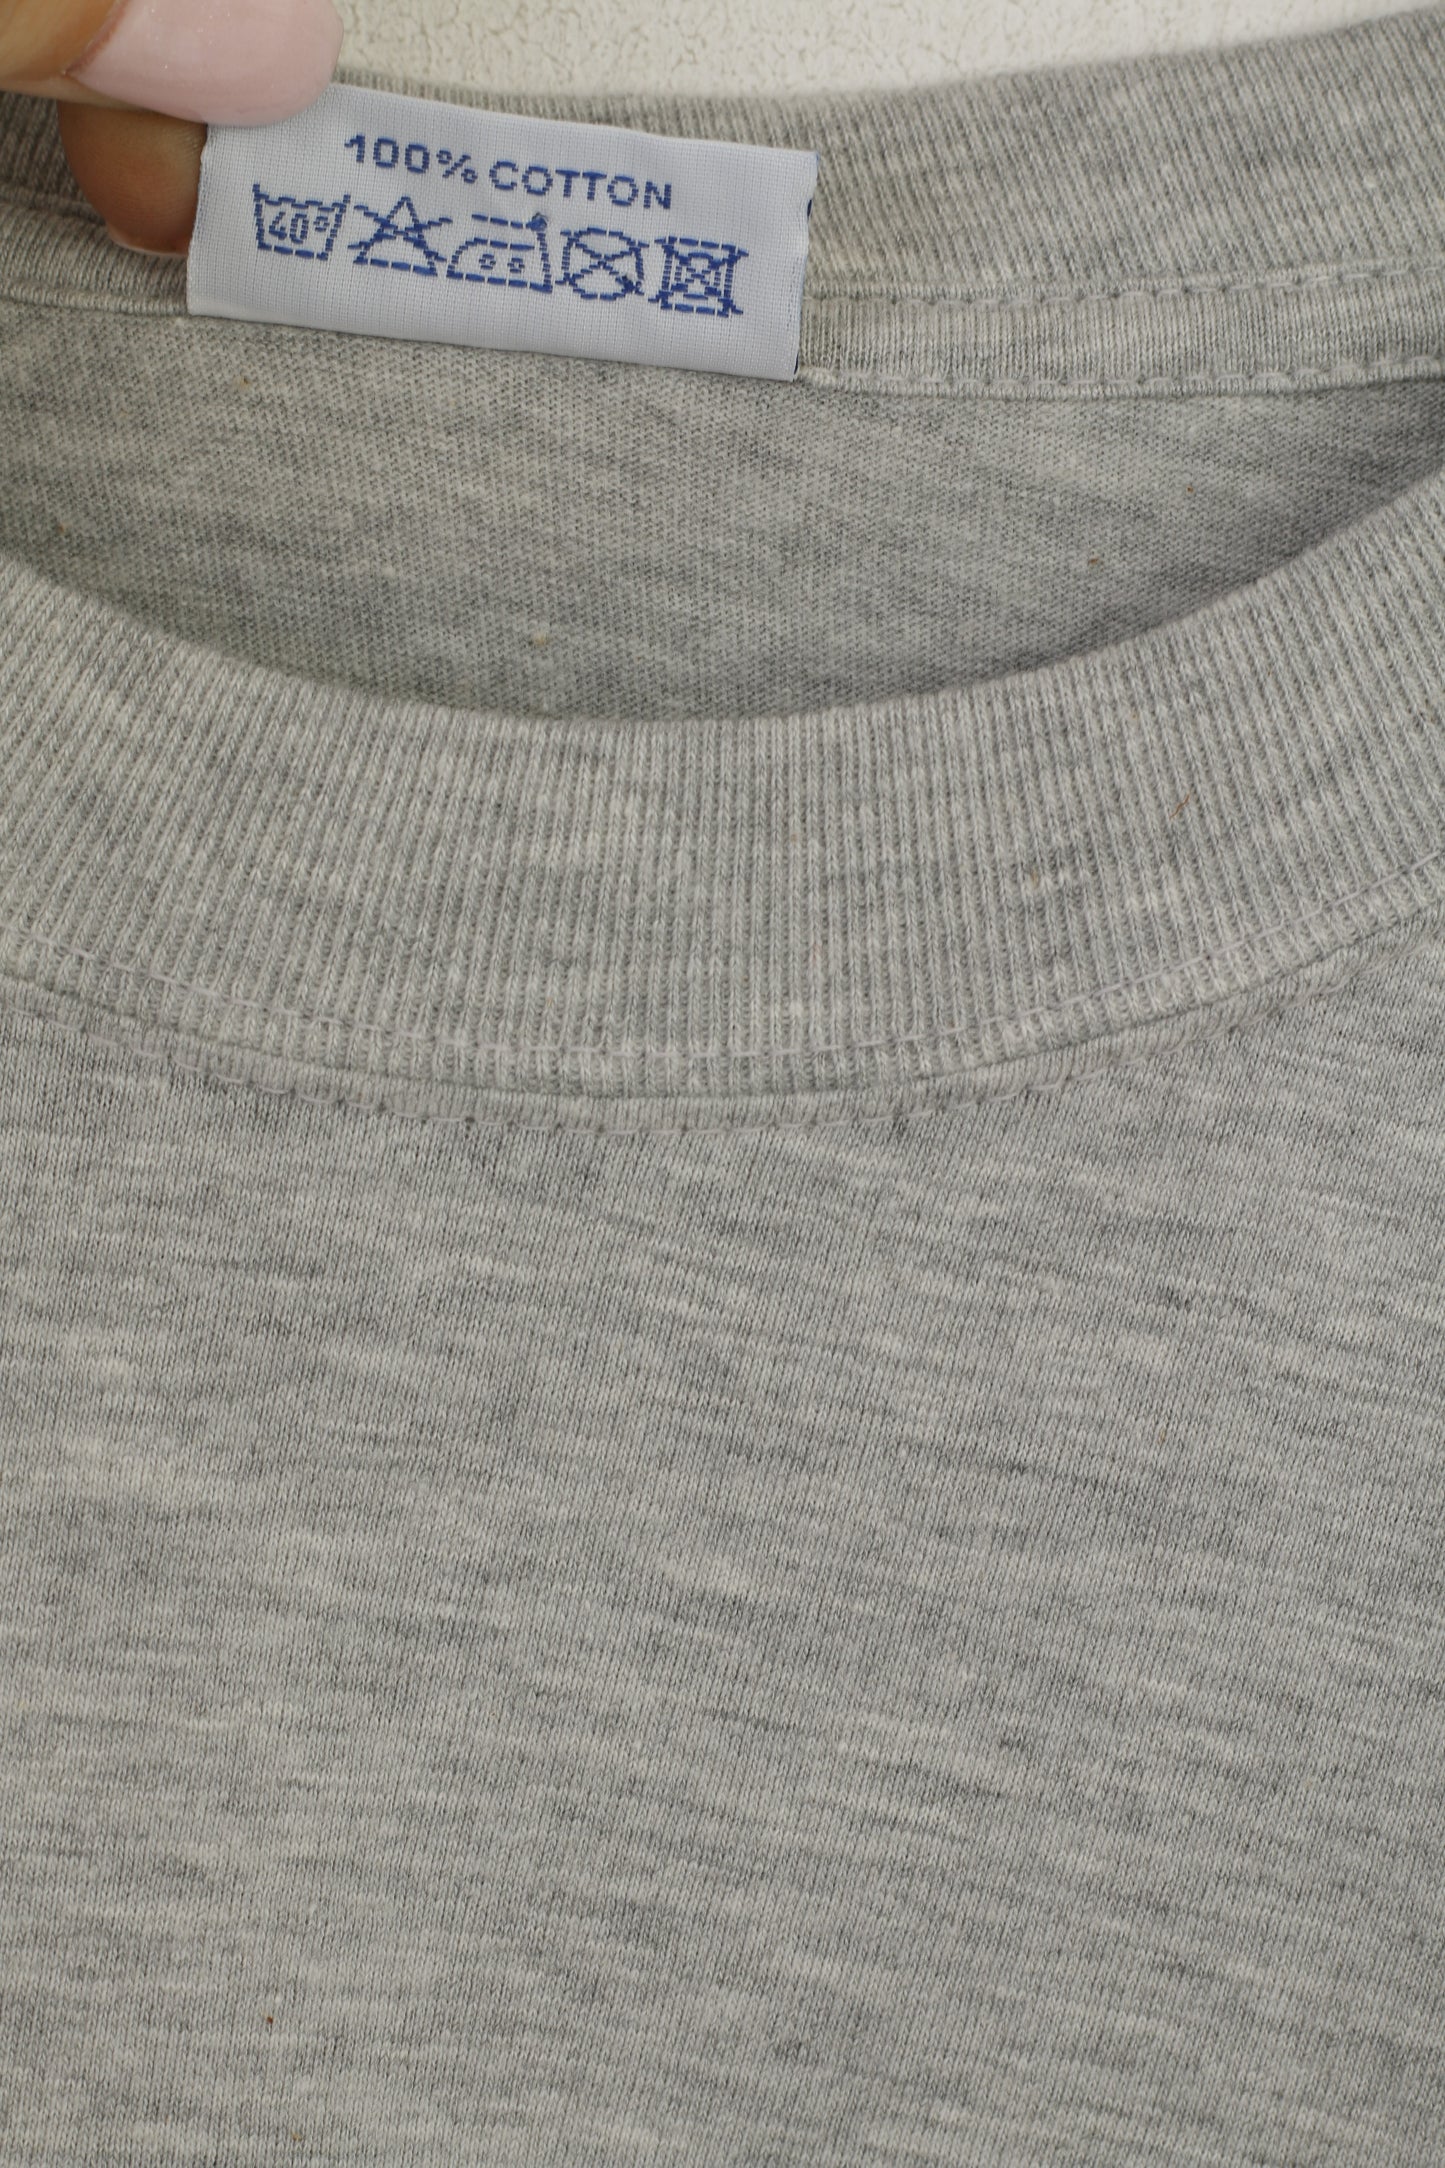 Sergio Tacchini Men XXL T-Shirt Gray Cotton Long Tall Graphic Logo Top